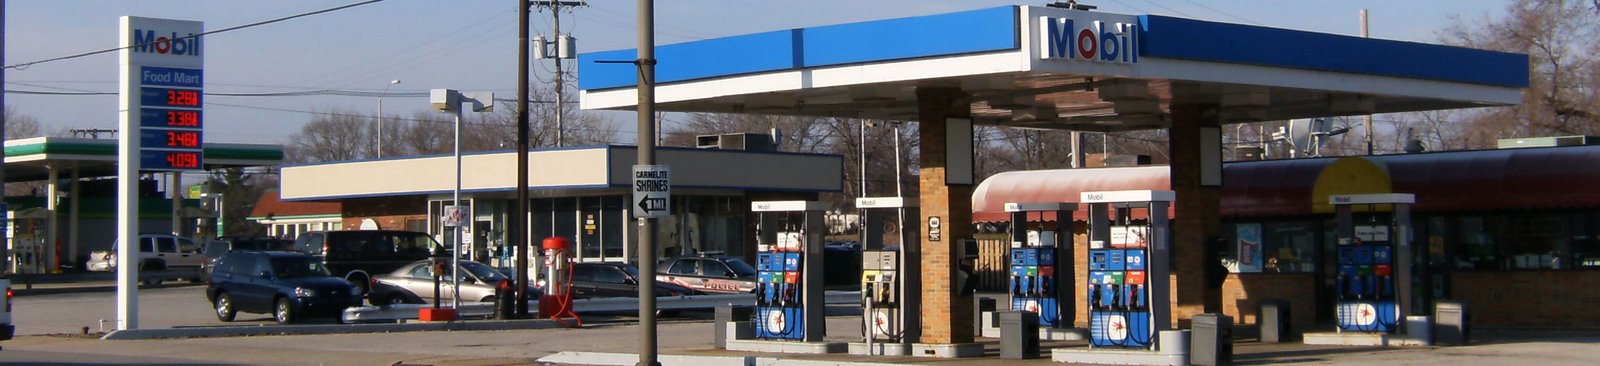 -Munster Mobil Gas Station-